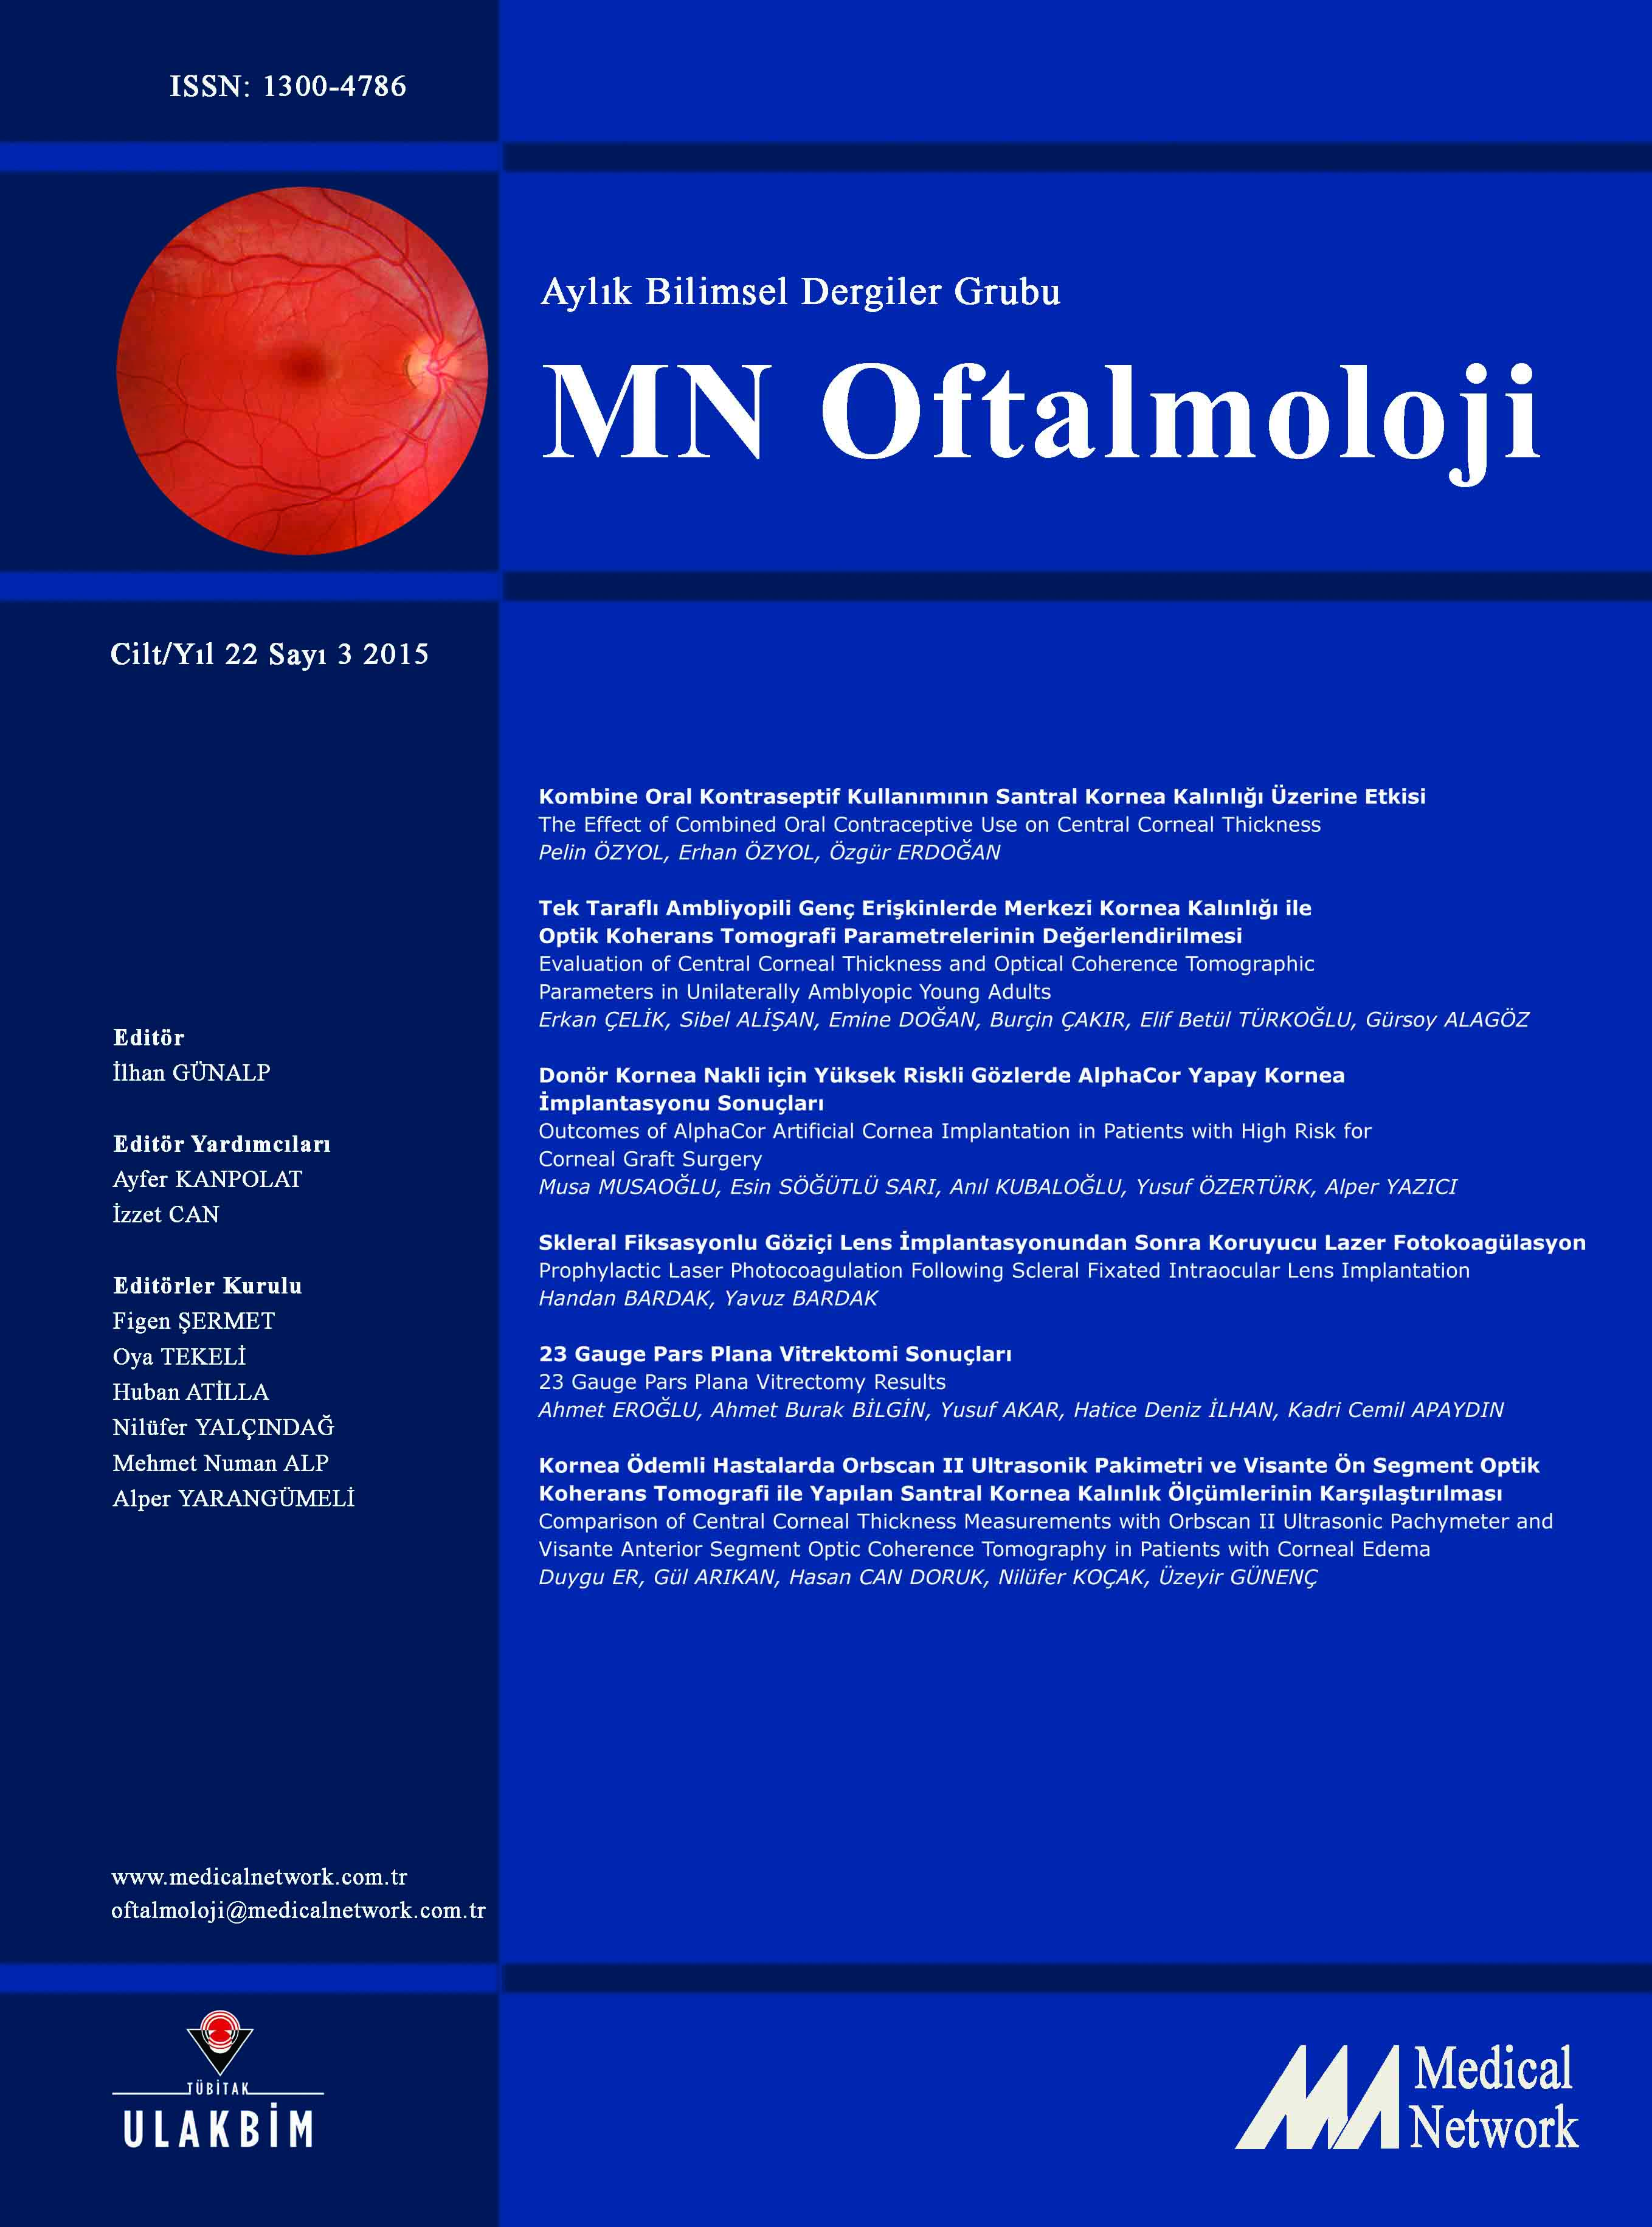 <p>MN Oftalmoloji Cilt: 22 Say: 3 2015 (MN Ophthalmology Volume: 22 No 3 2015)</p>